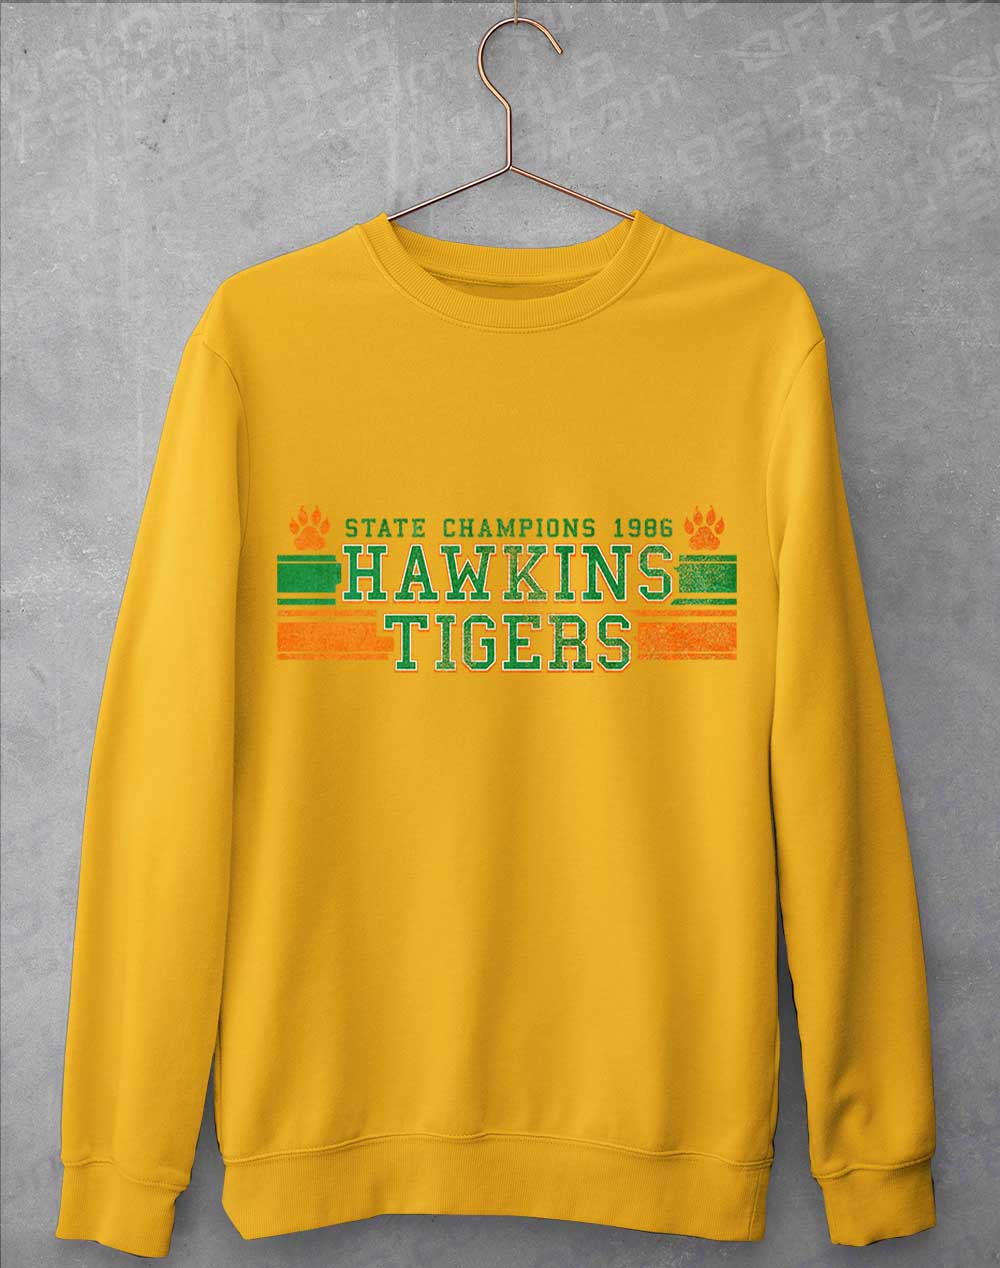 Gold - Hawkins Tigers State Champs 1986 Sweatshirt